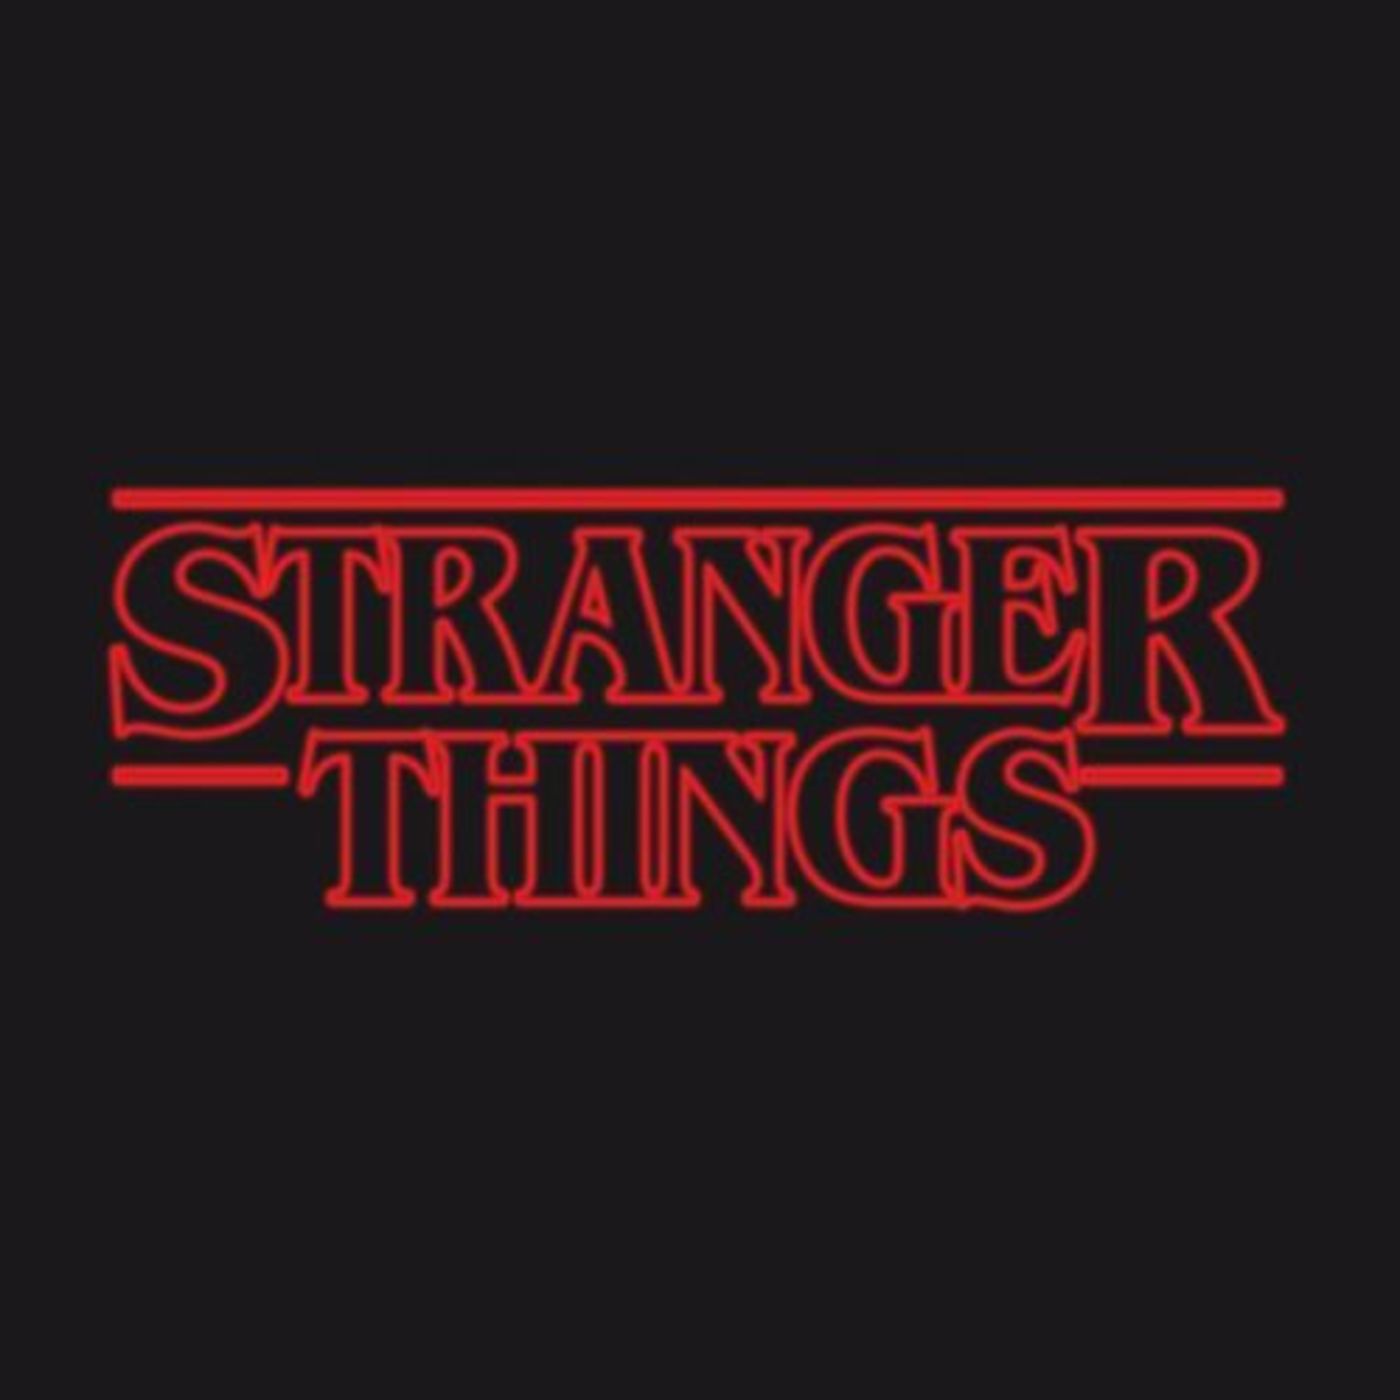 De grote Stranger Things seizoen 2 voorbereidingsaflevering